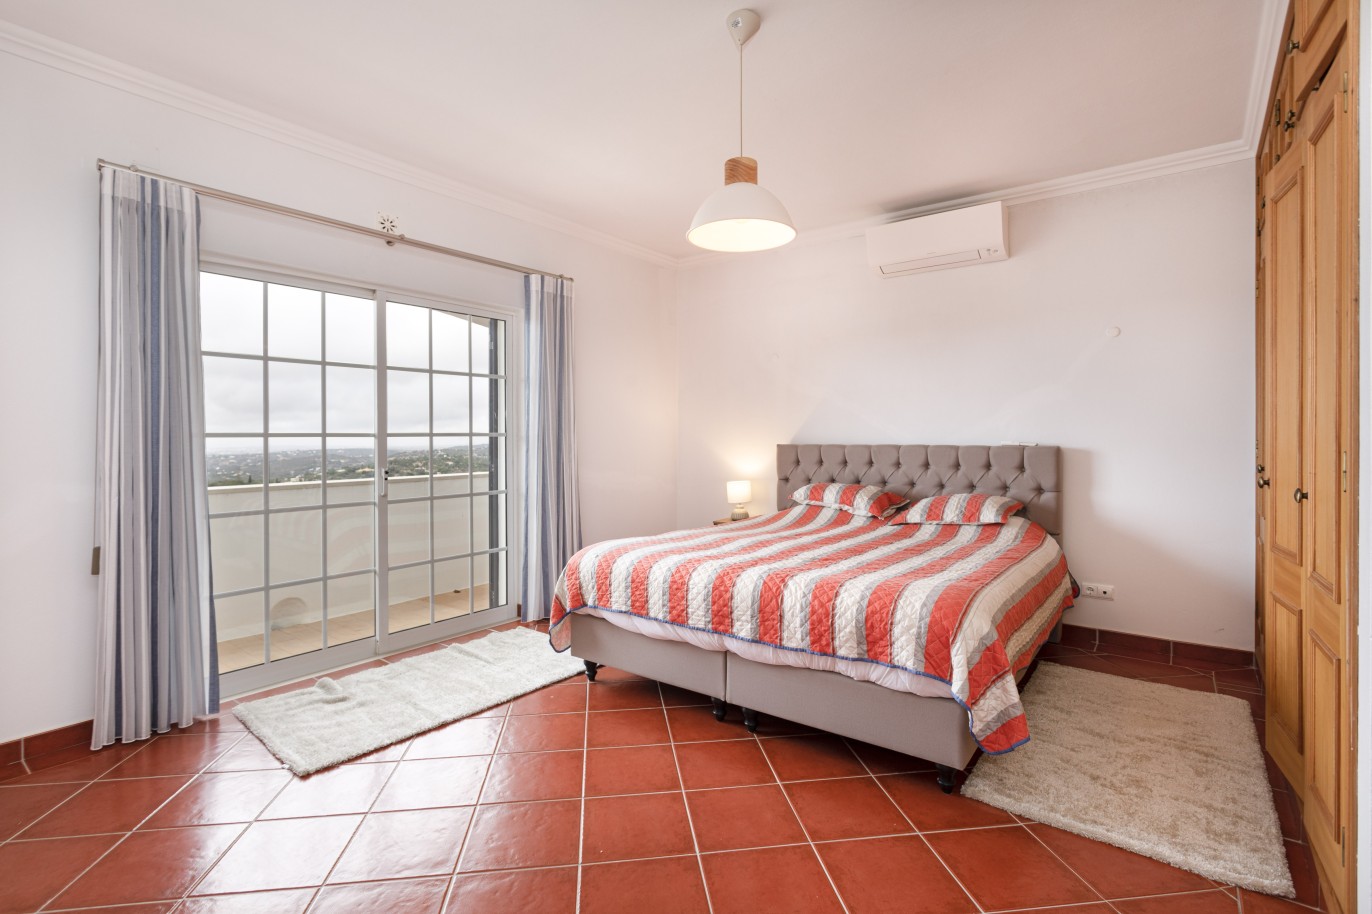 4-Bedroom Villa with swimming pool, for sale in Boliqueime, Loulé, Algarve_242636